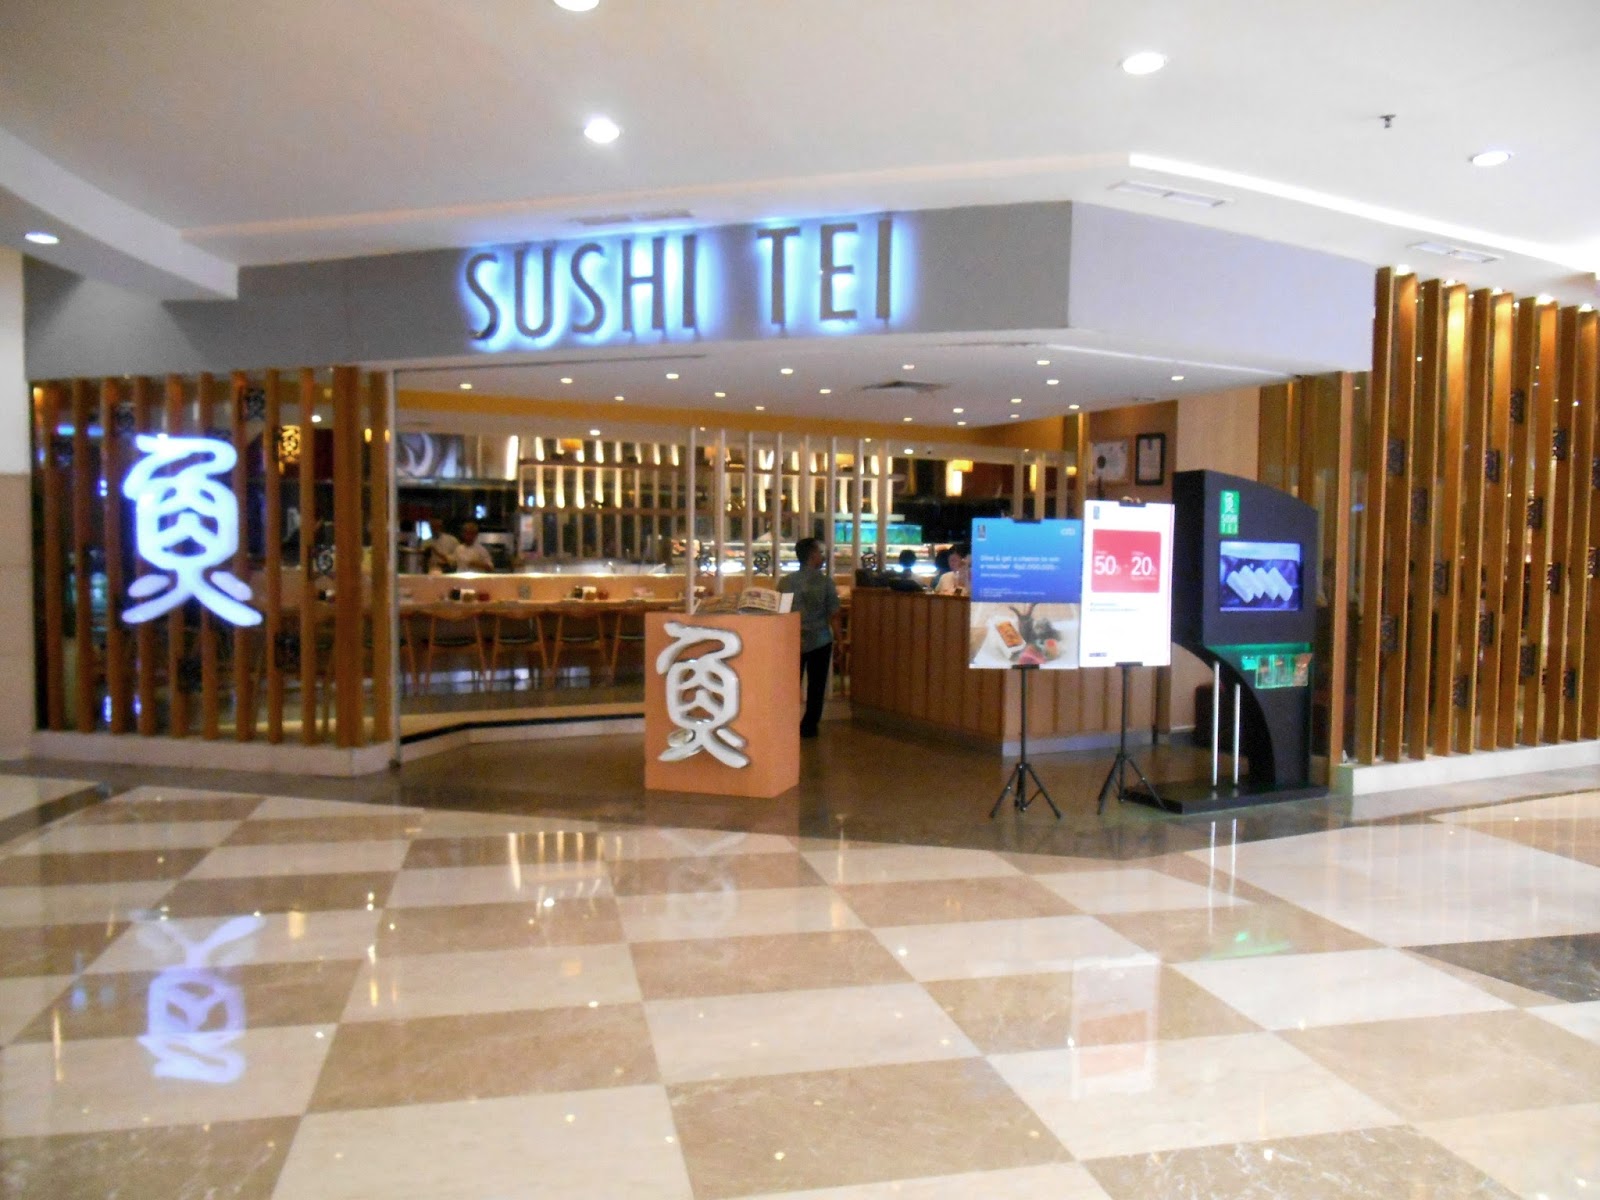 Makan di Sushi Tei Galaxy Mall Surabaya | Goresan Pena Nena